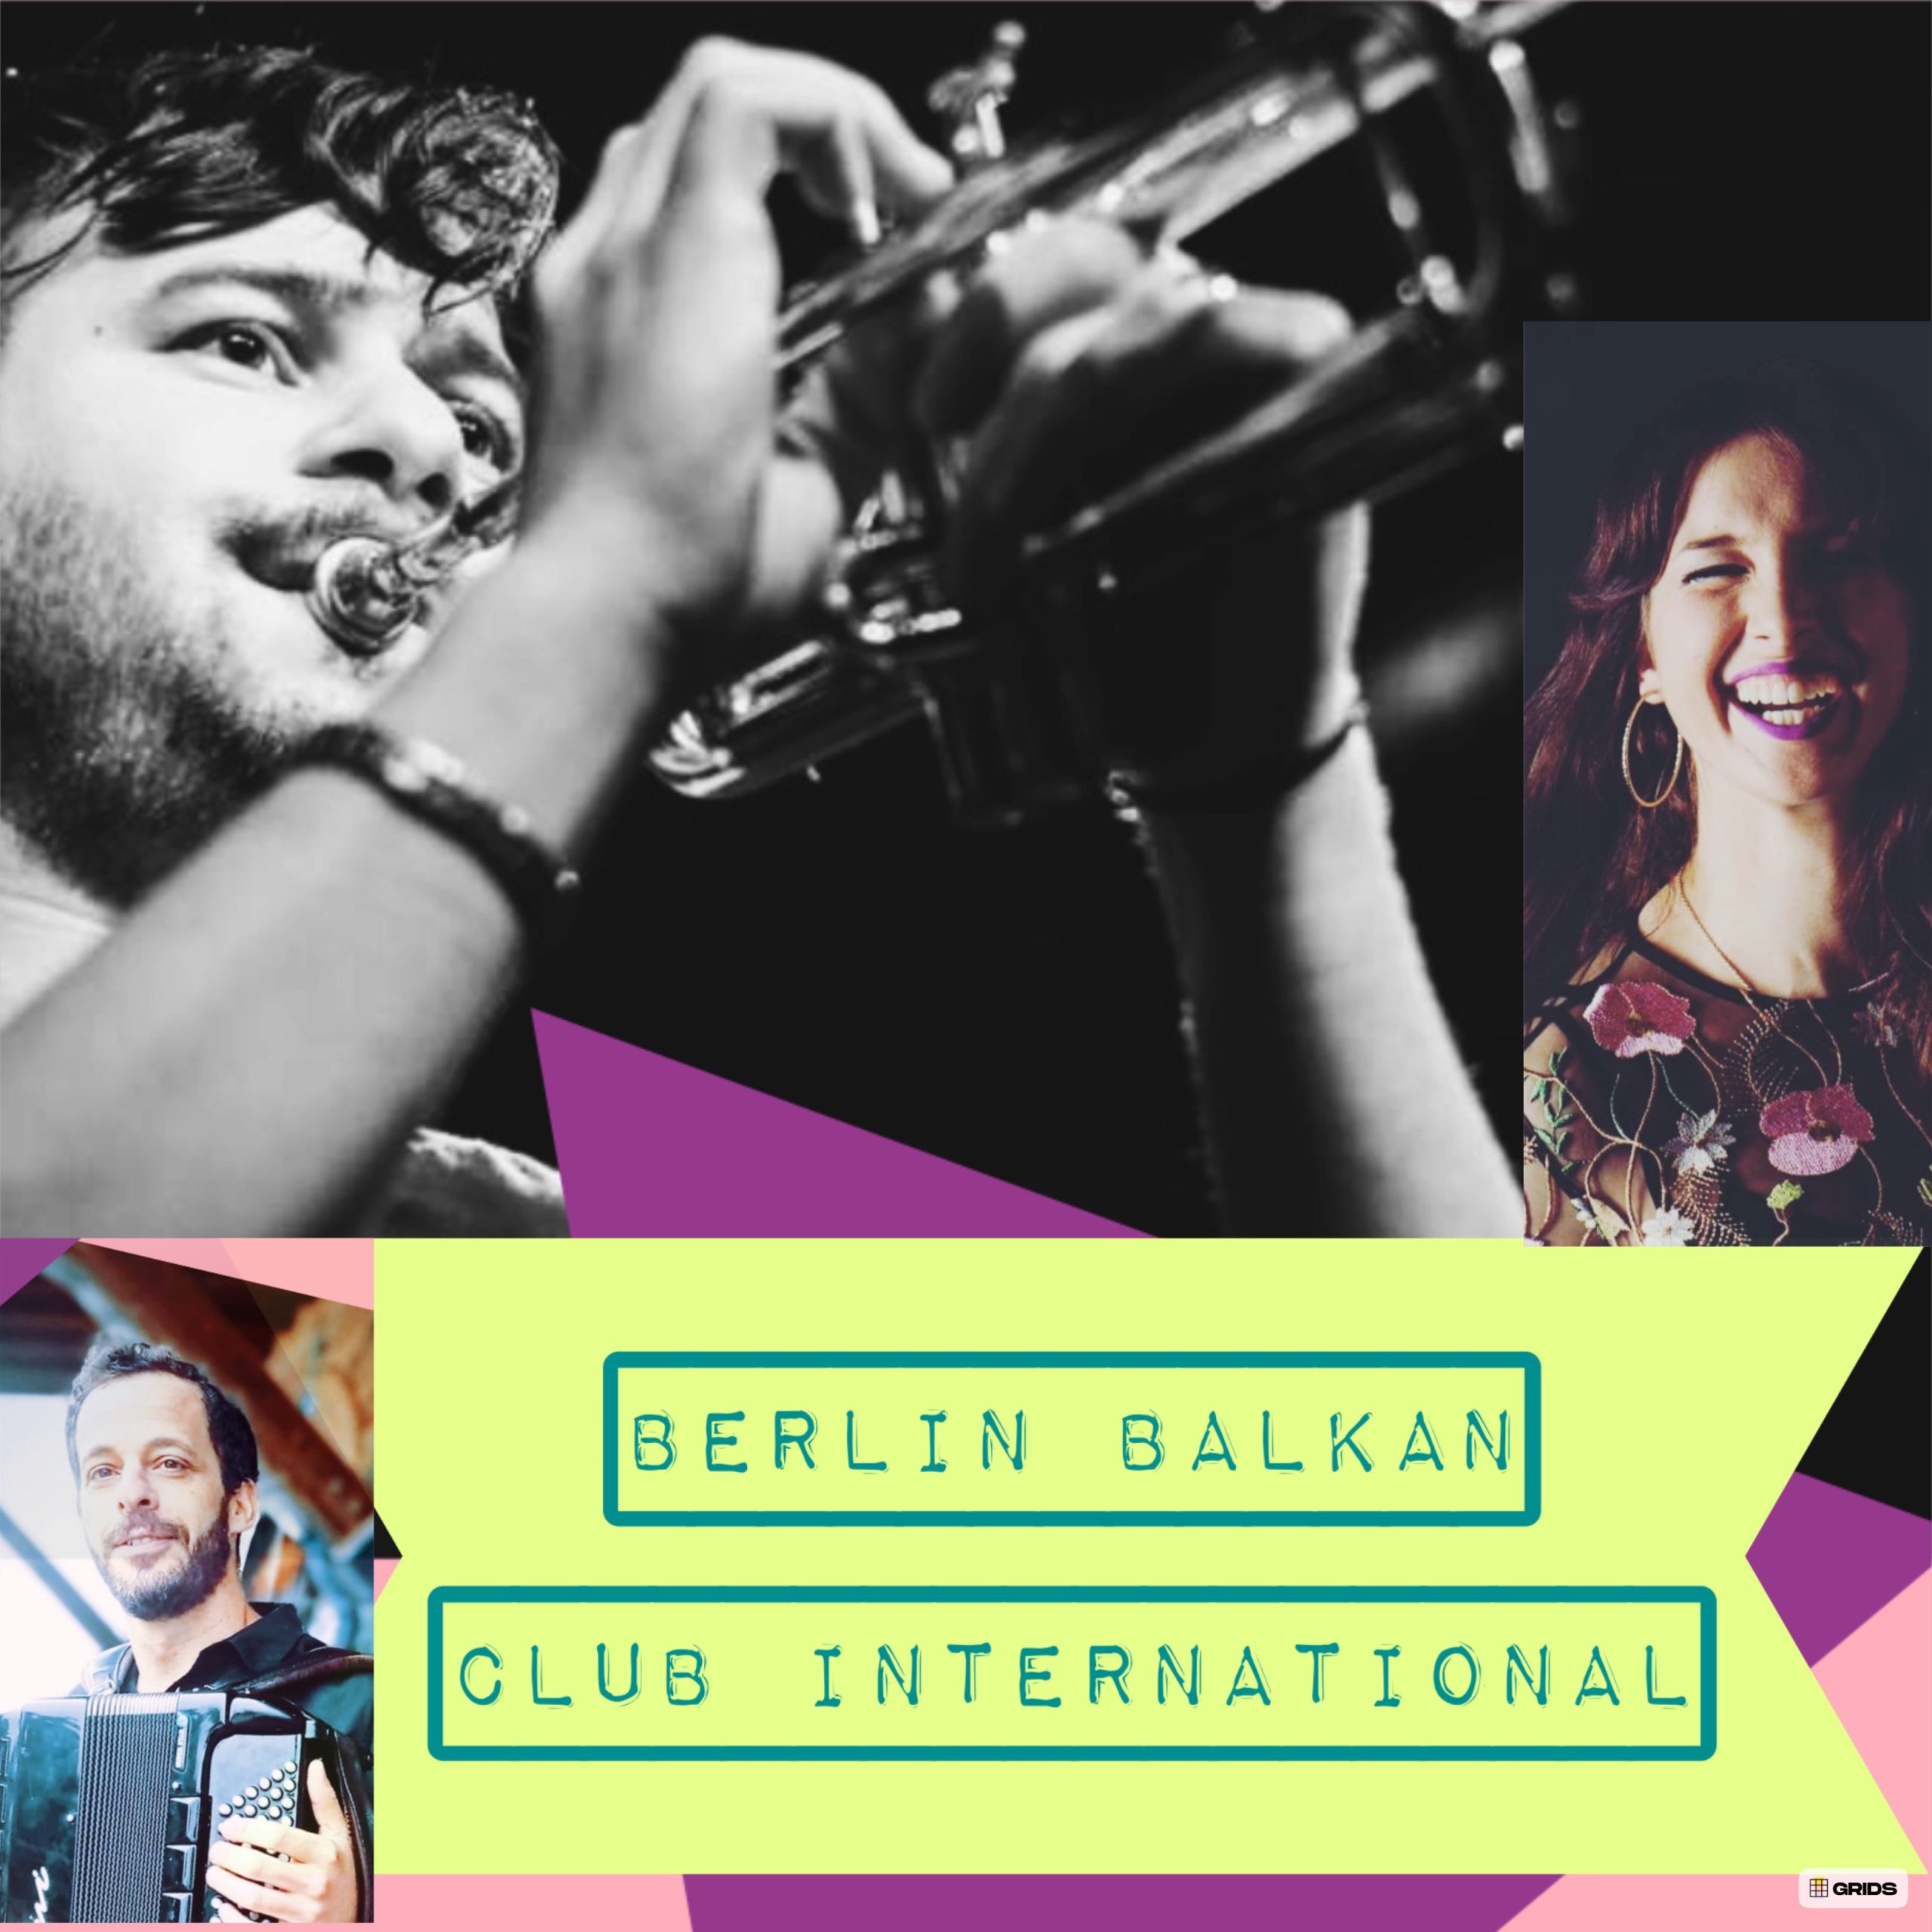 BERLIN BALKAN CLUB INTERNATIONAL - 02/06, 20:00